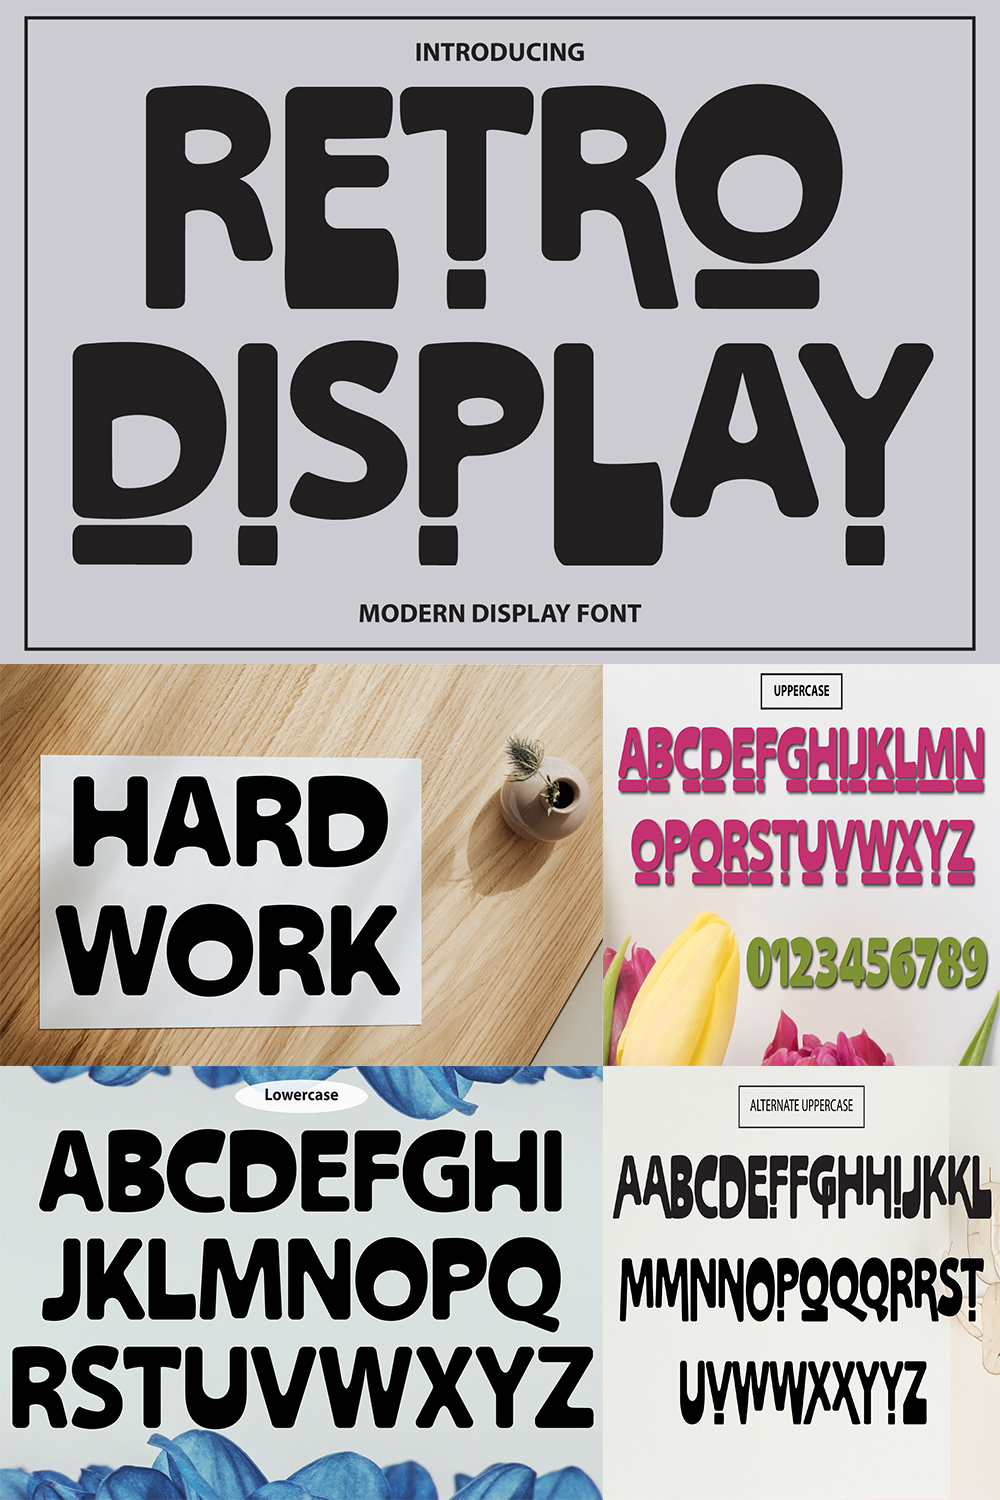 Retro Display Font Pinterest collage image.